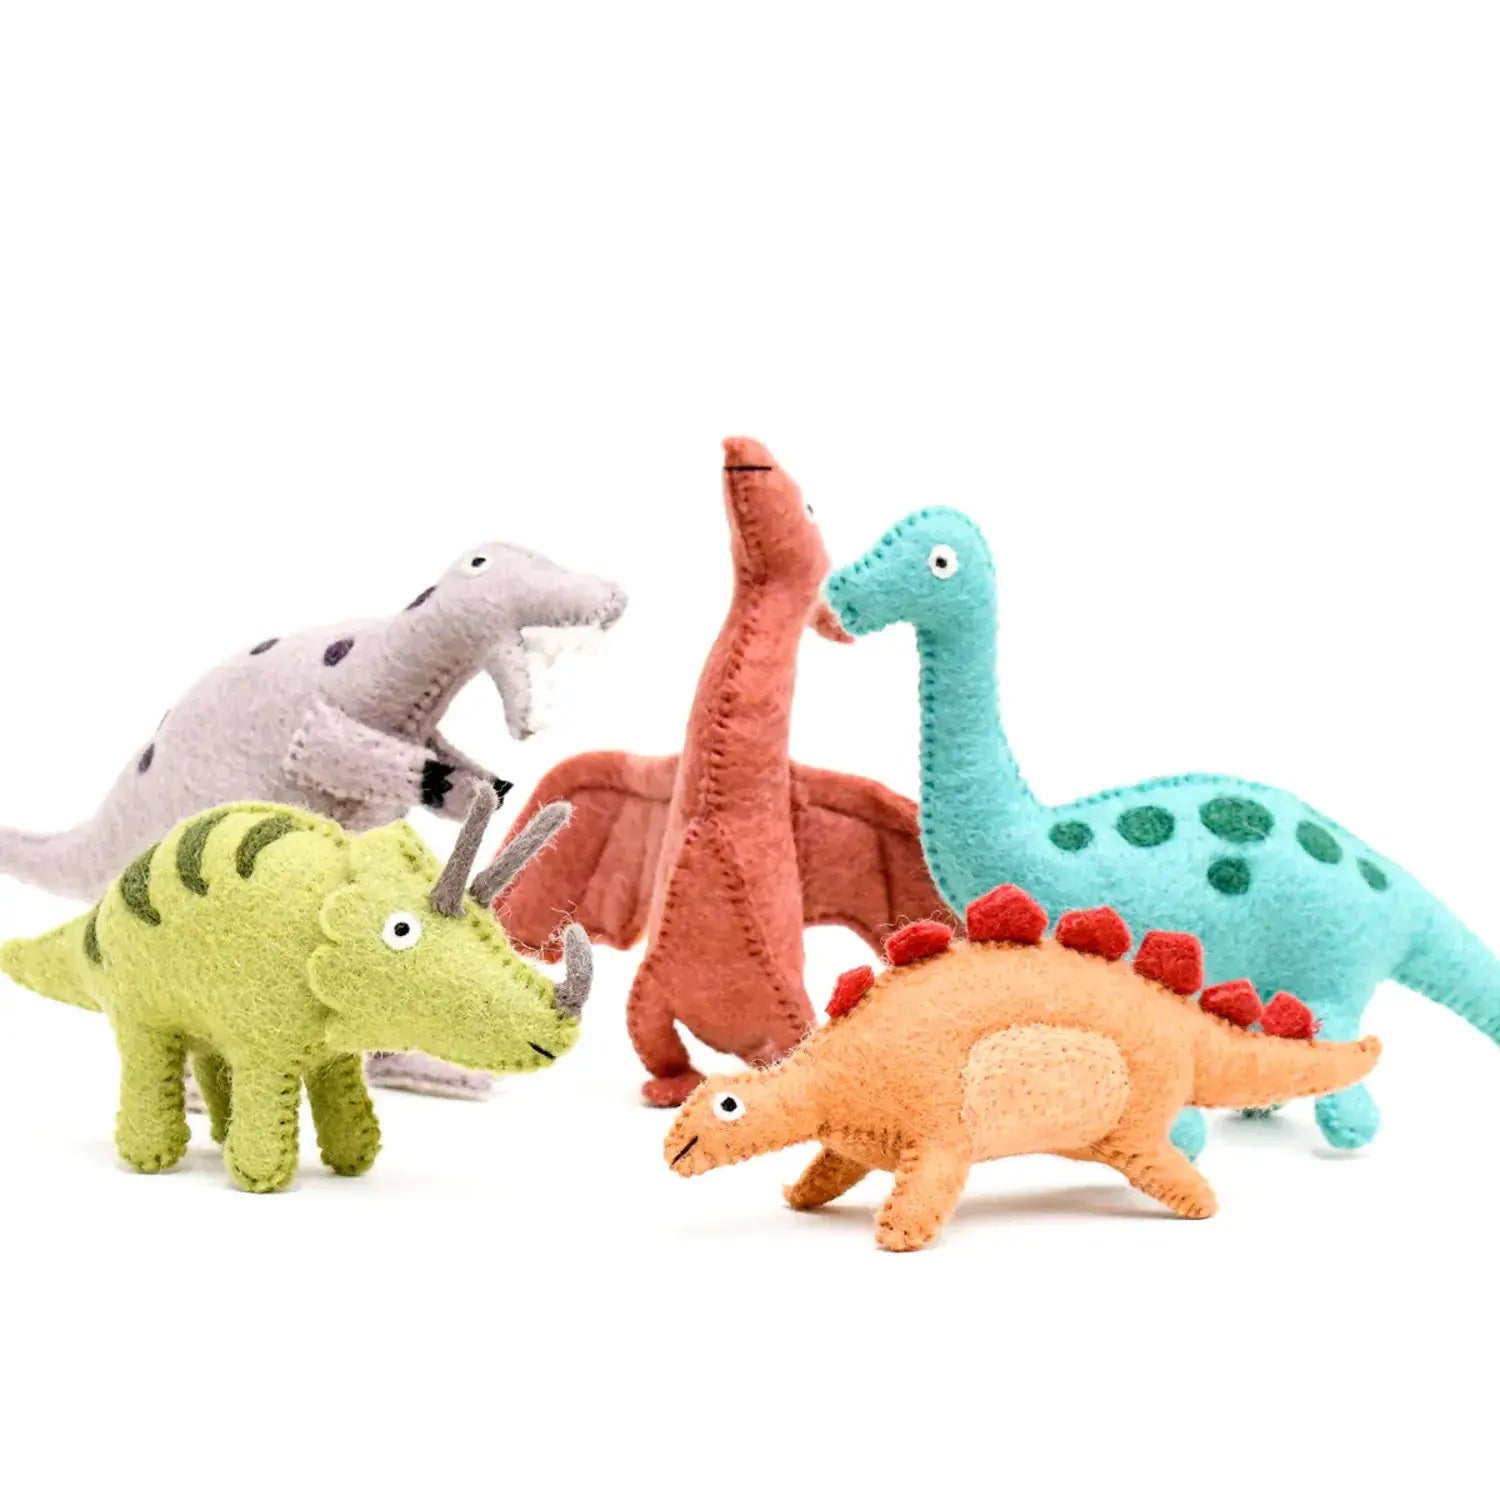 Felt Tyrannosaurus Rex Dinosaur Toy by Tara Treasures (T Rex)